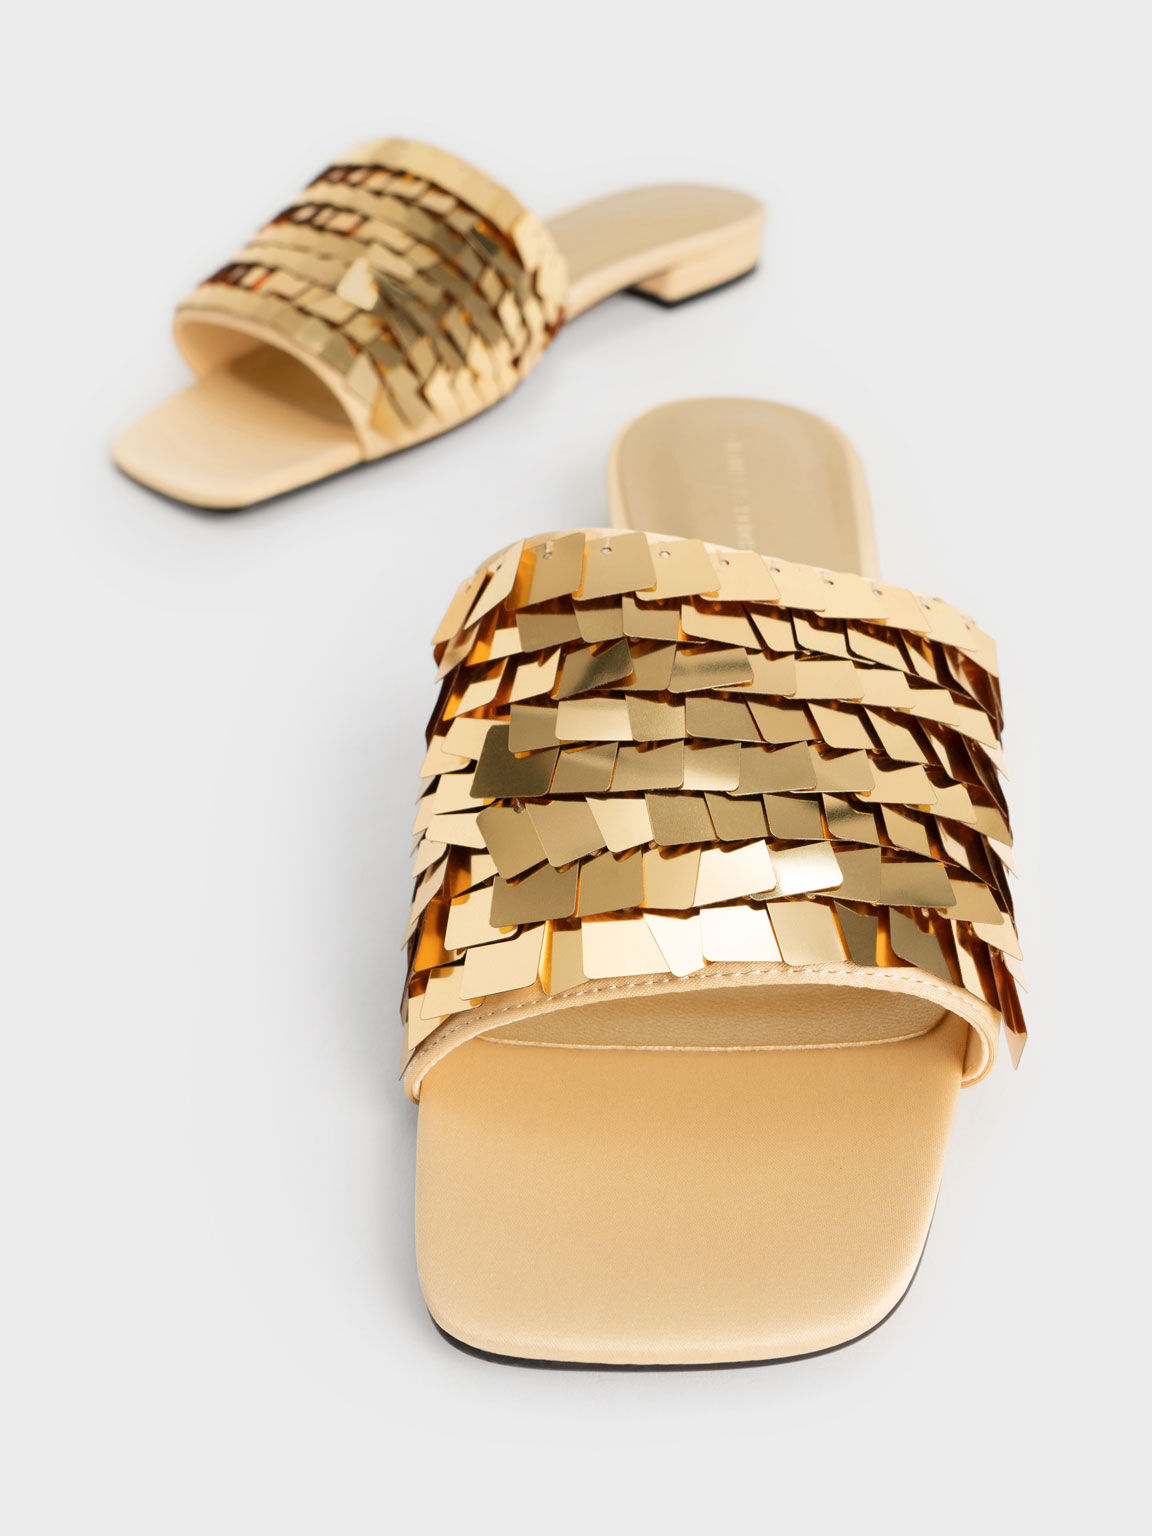 ZARA Gold Embellished Crystal Flat Sandals Slides NEW Size EU 4O / UK 7 /  US 9 | eBay